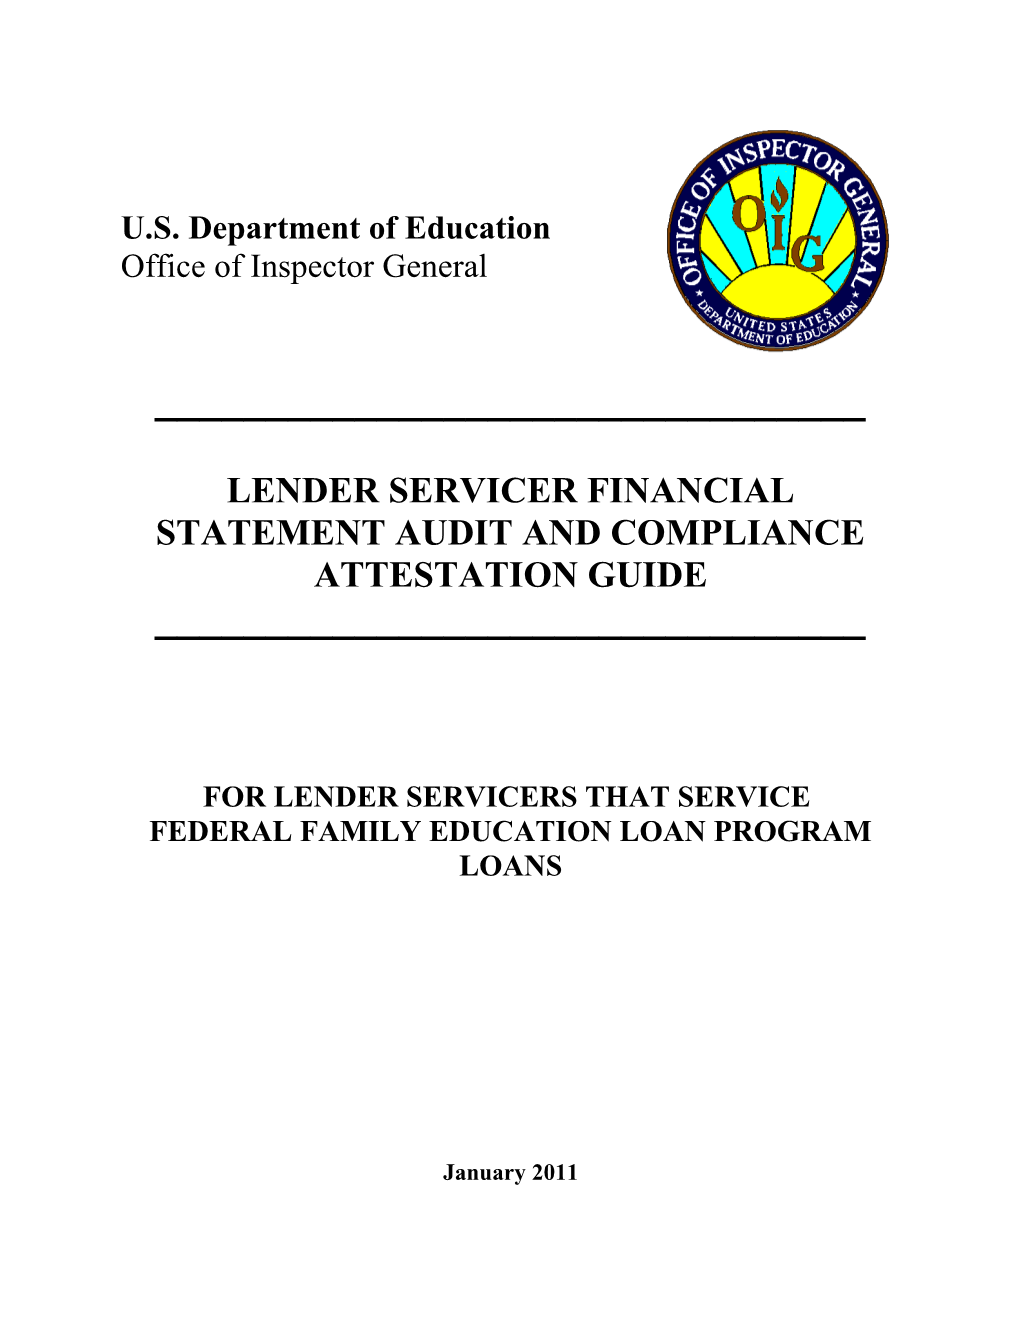 FFELP Lender Servicer Audit Guide (MS Word)